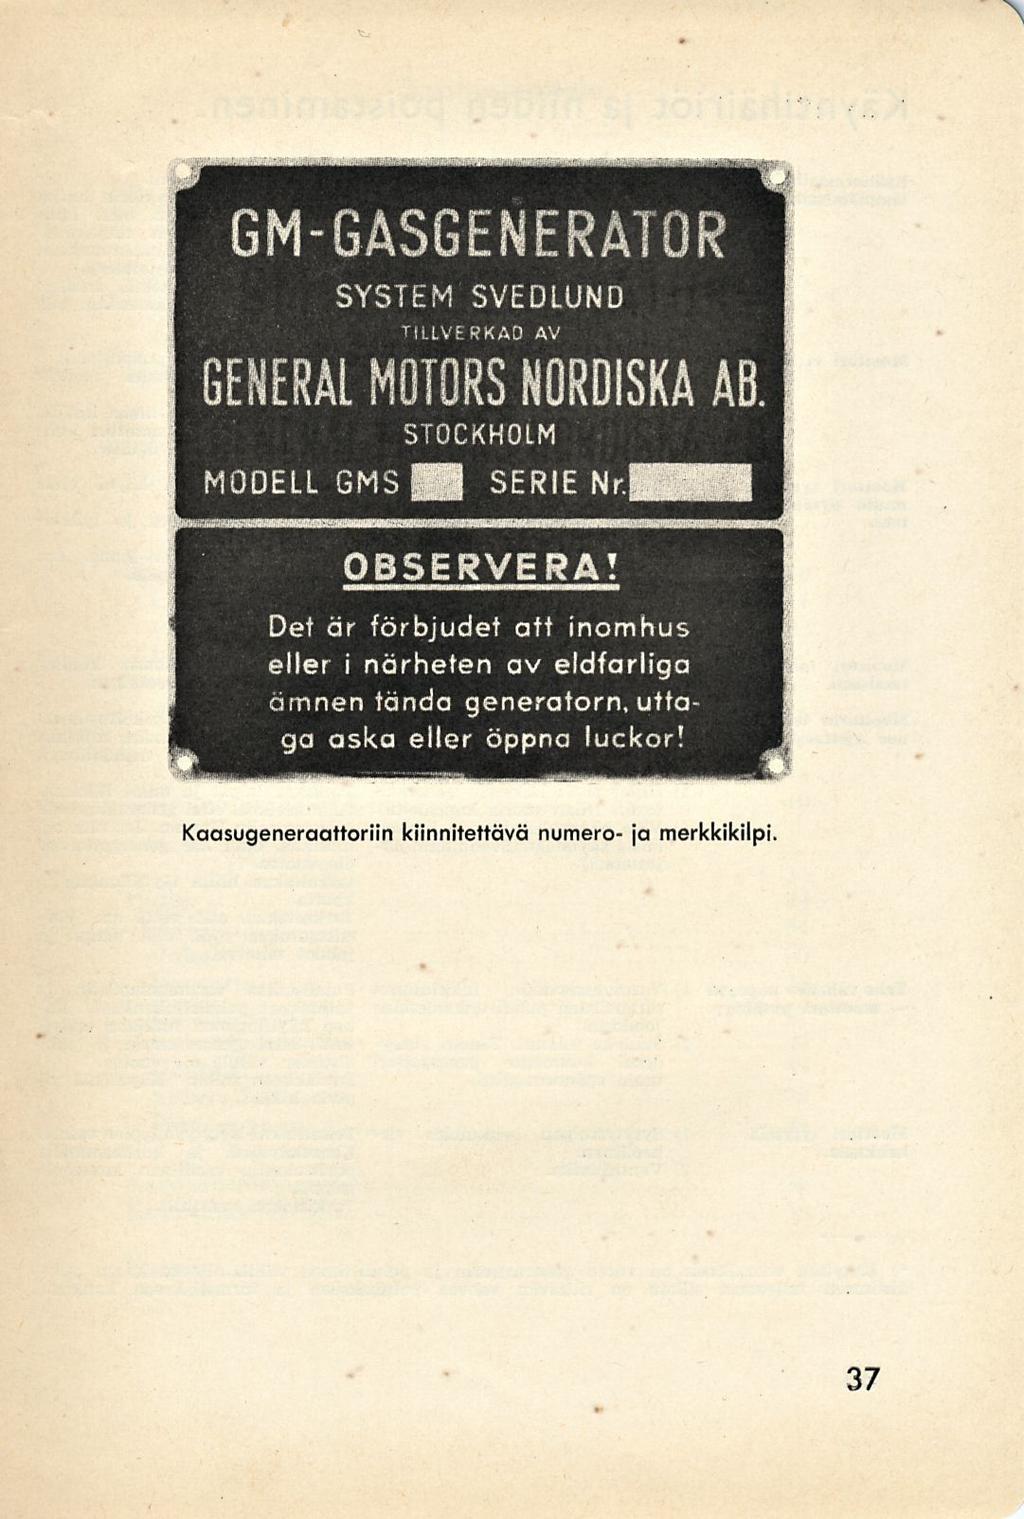 i - L GM-GASGENERATOR SYSTEM SVED LUND TILLVERKAO AV GENERAL MOTORS NORDISKA AB. STOCKHOLM MODELLGMSHI SERIE NrUHi M" i OBSERVERA!